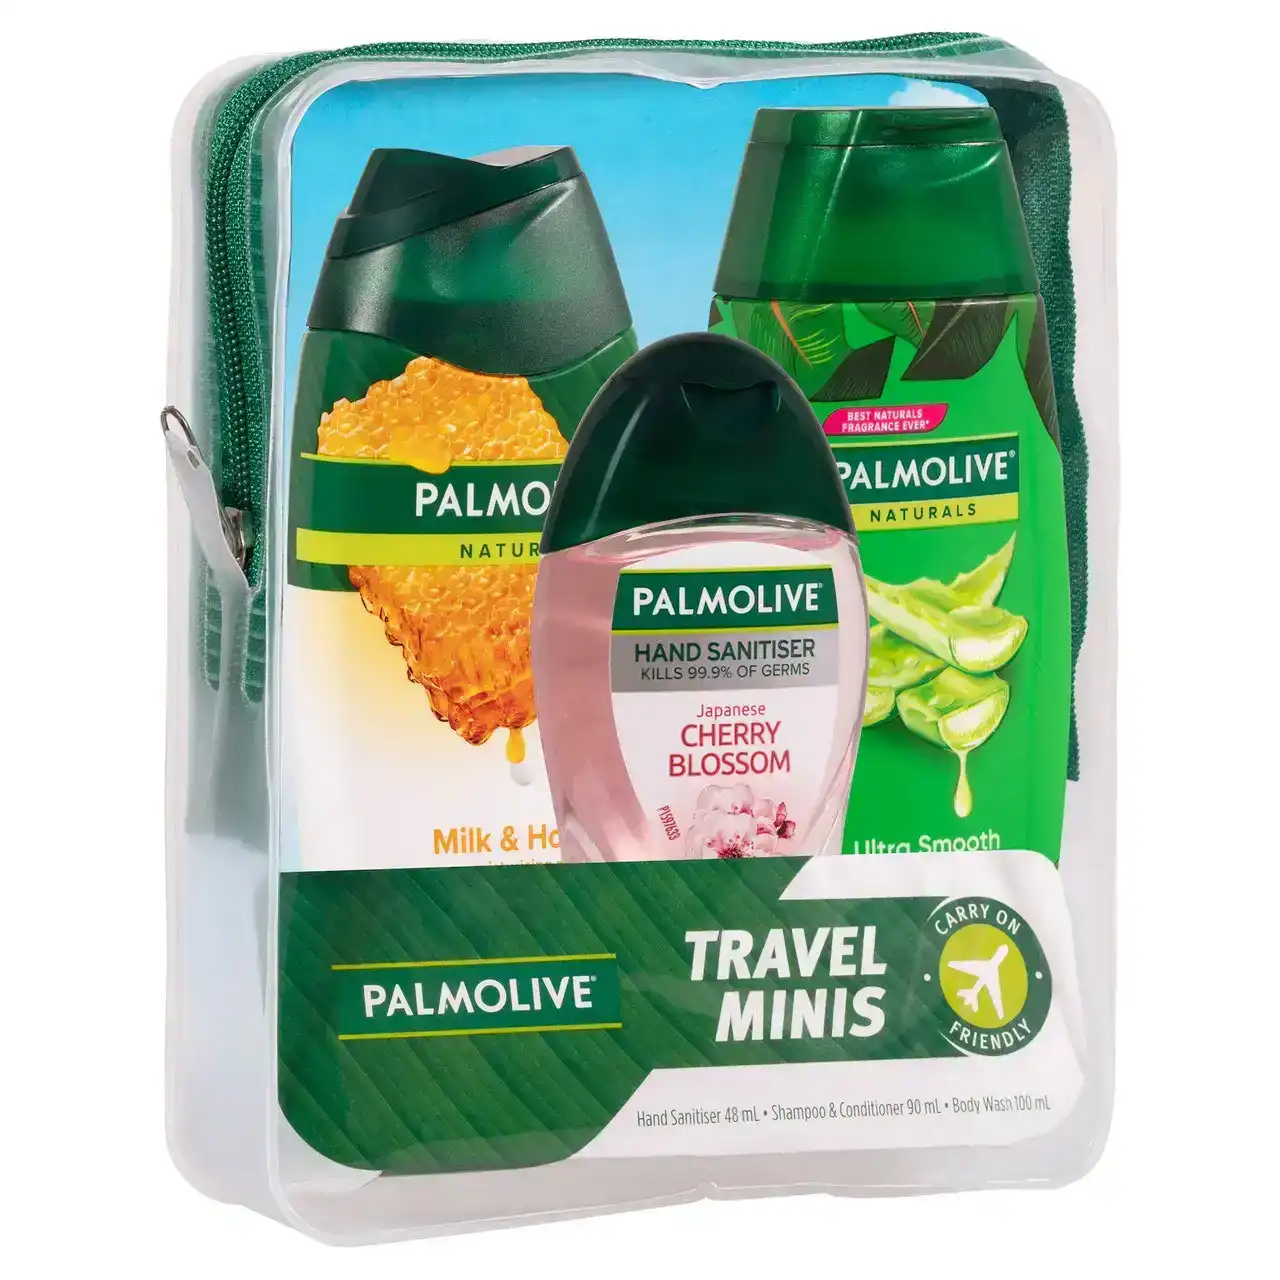 Palmolive Travel Minis Pack, Antibacterial Hand Sanitiser 48mL, Hair Shampoo & Conditioner 90mL, Body Wash 100mL